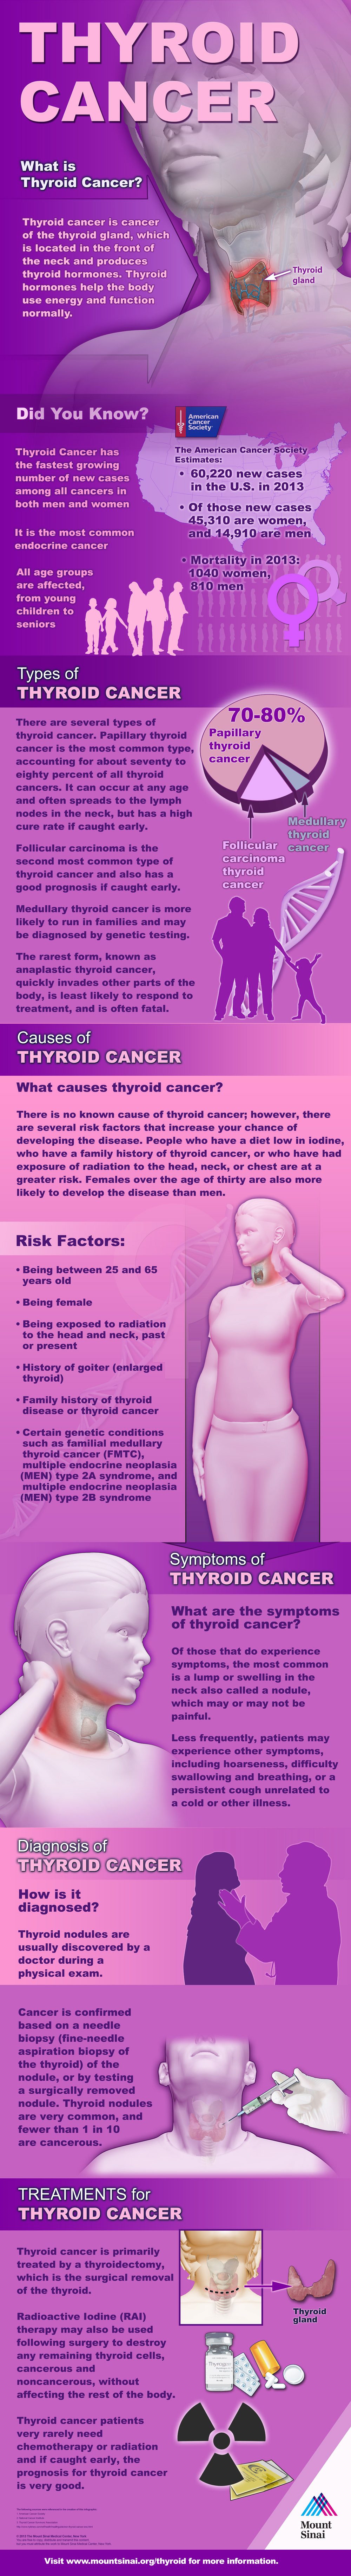 thyroid cancer infolg